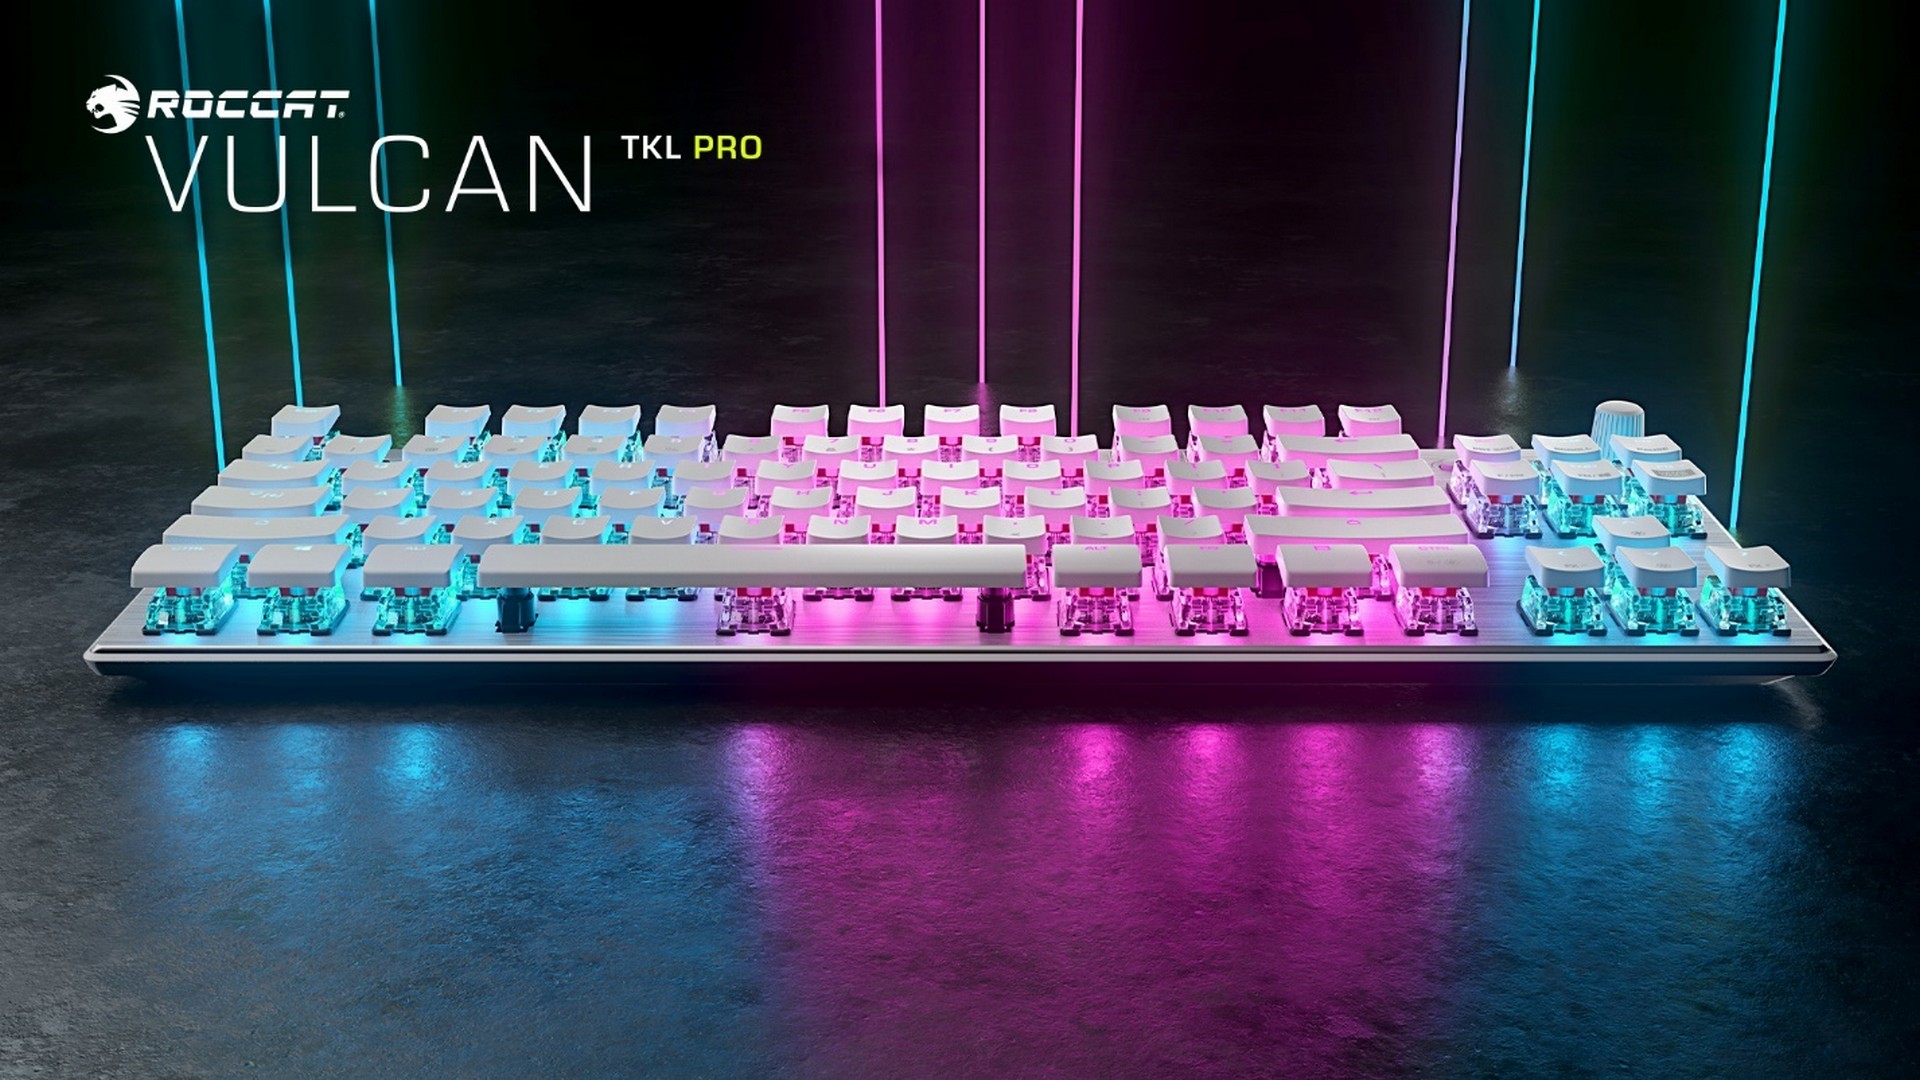 Award-Winning Vulcan TKL Pro PC Gaming Keyboard Is Coming In Arctic White In 2022